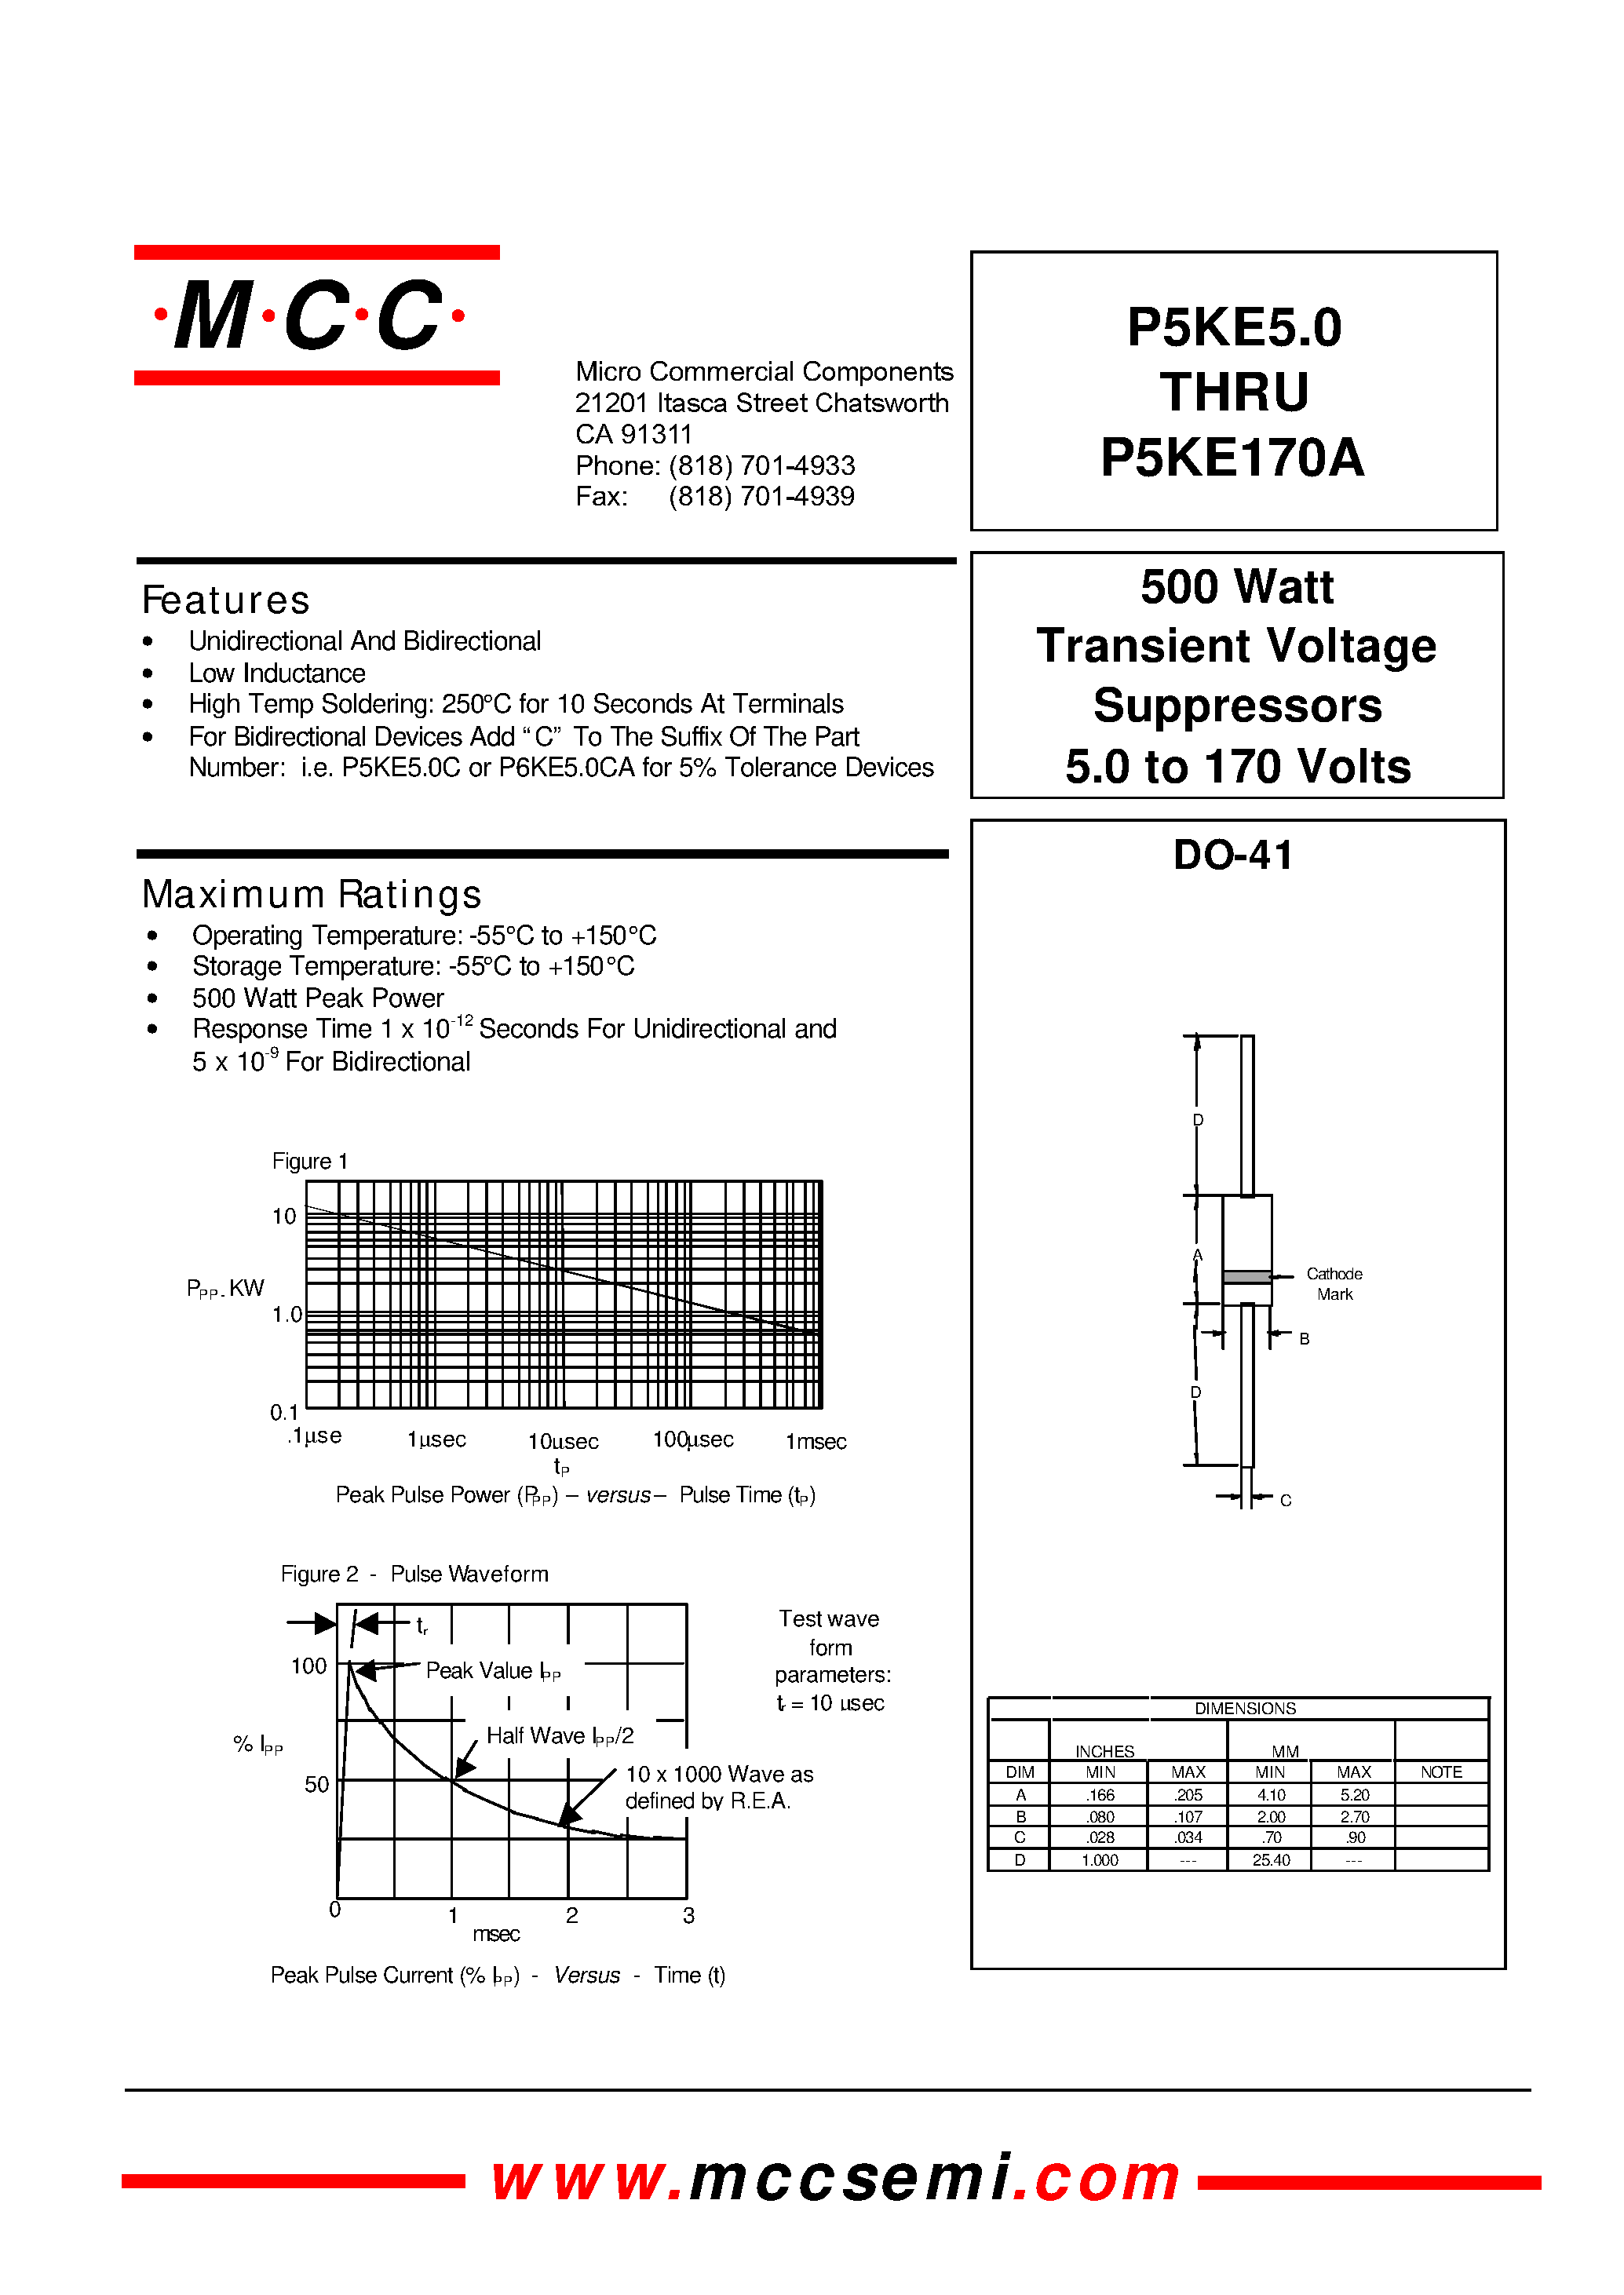 Datasheet P5KE6.5 - 500 Watt Transient Voltage Suppressors 5.0 to 170 Volts page 1